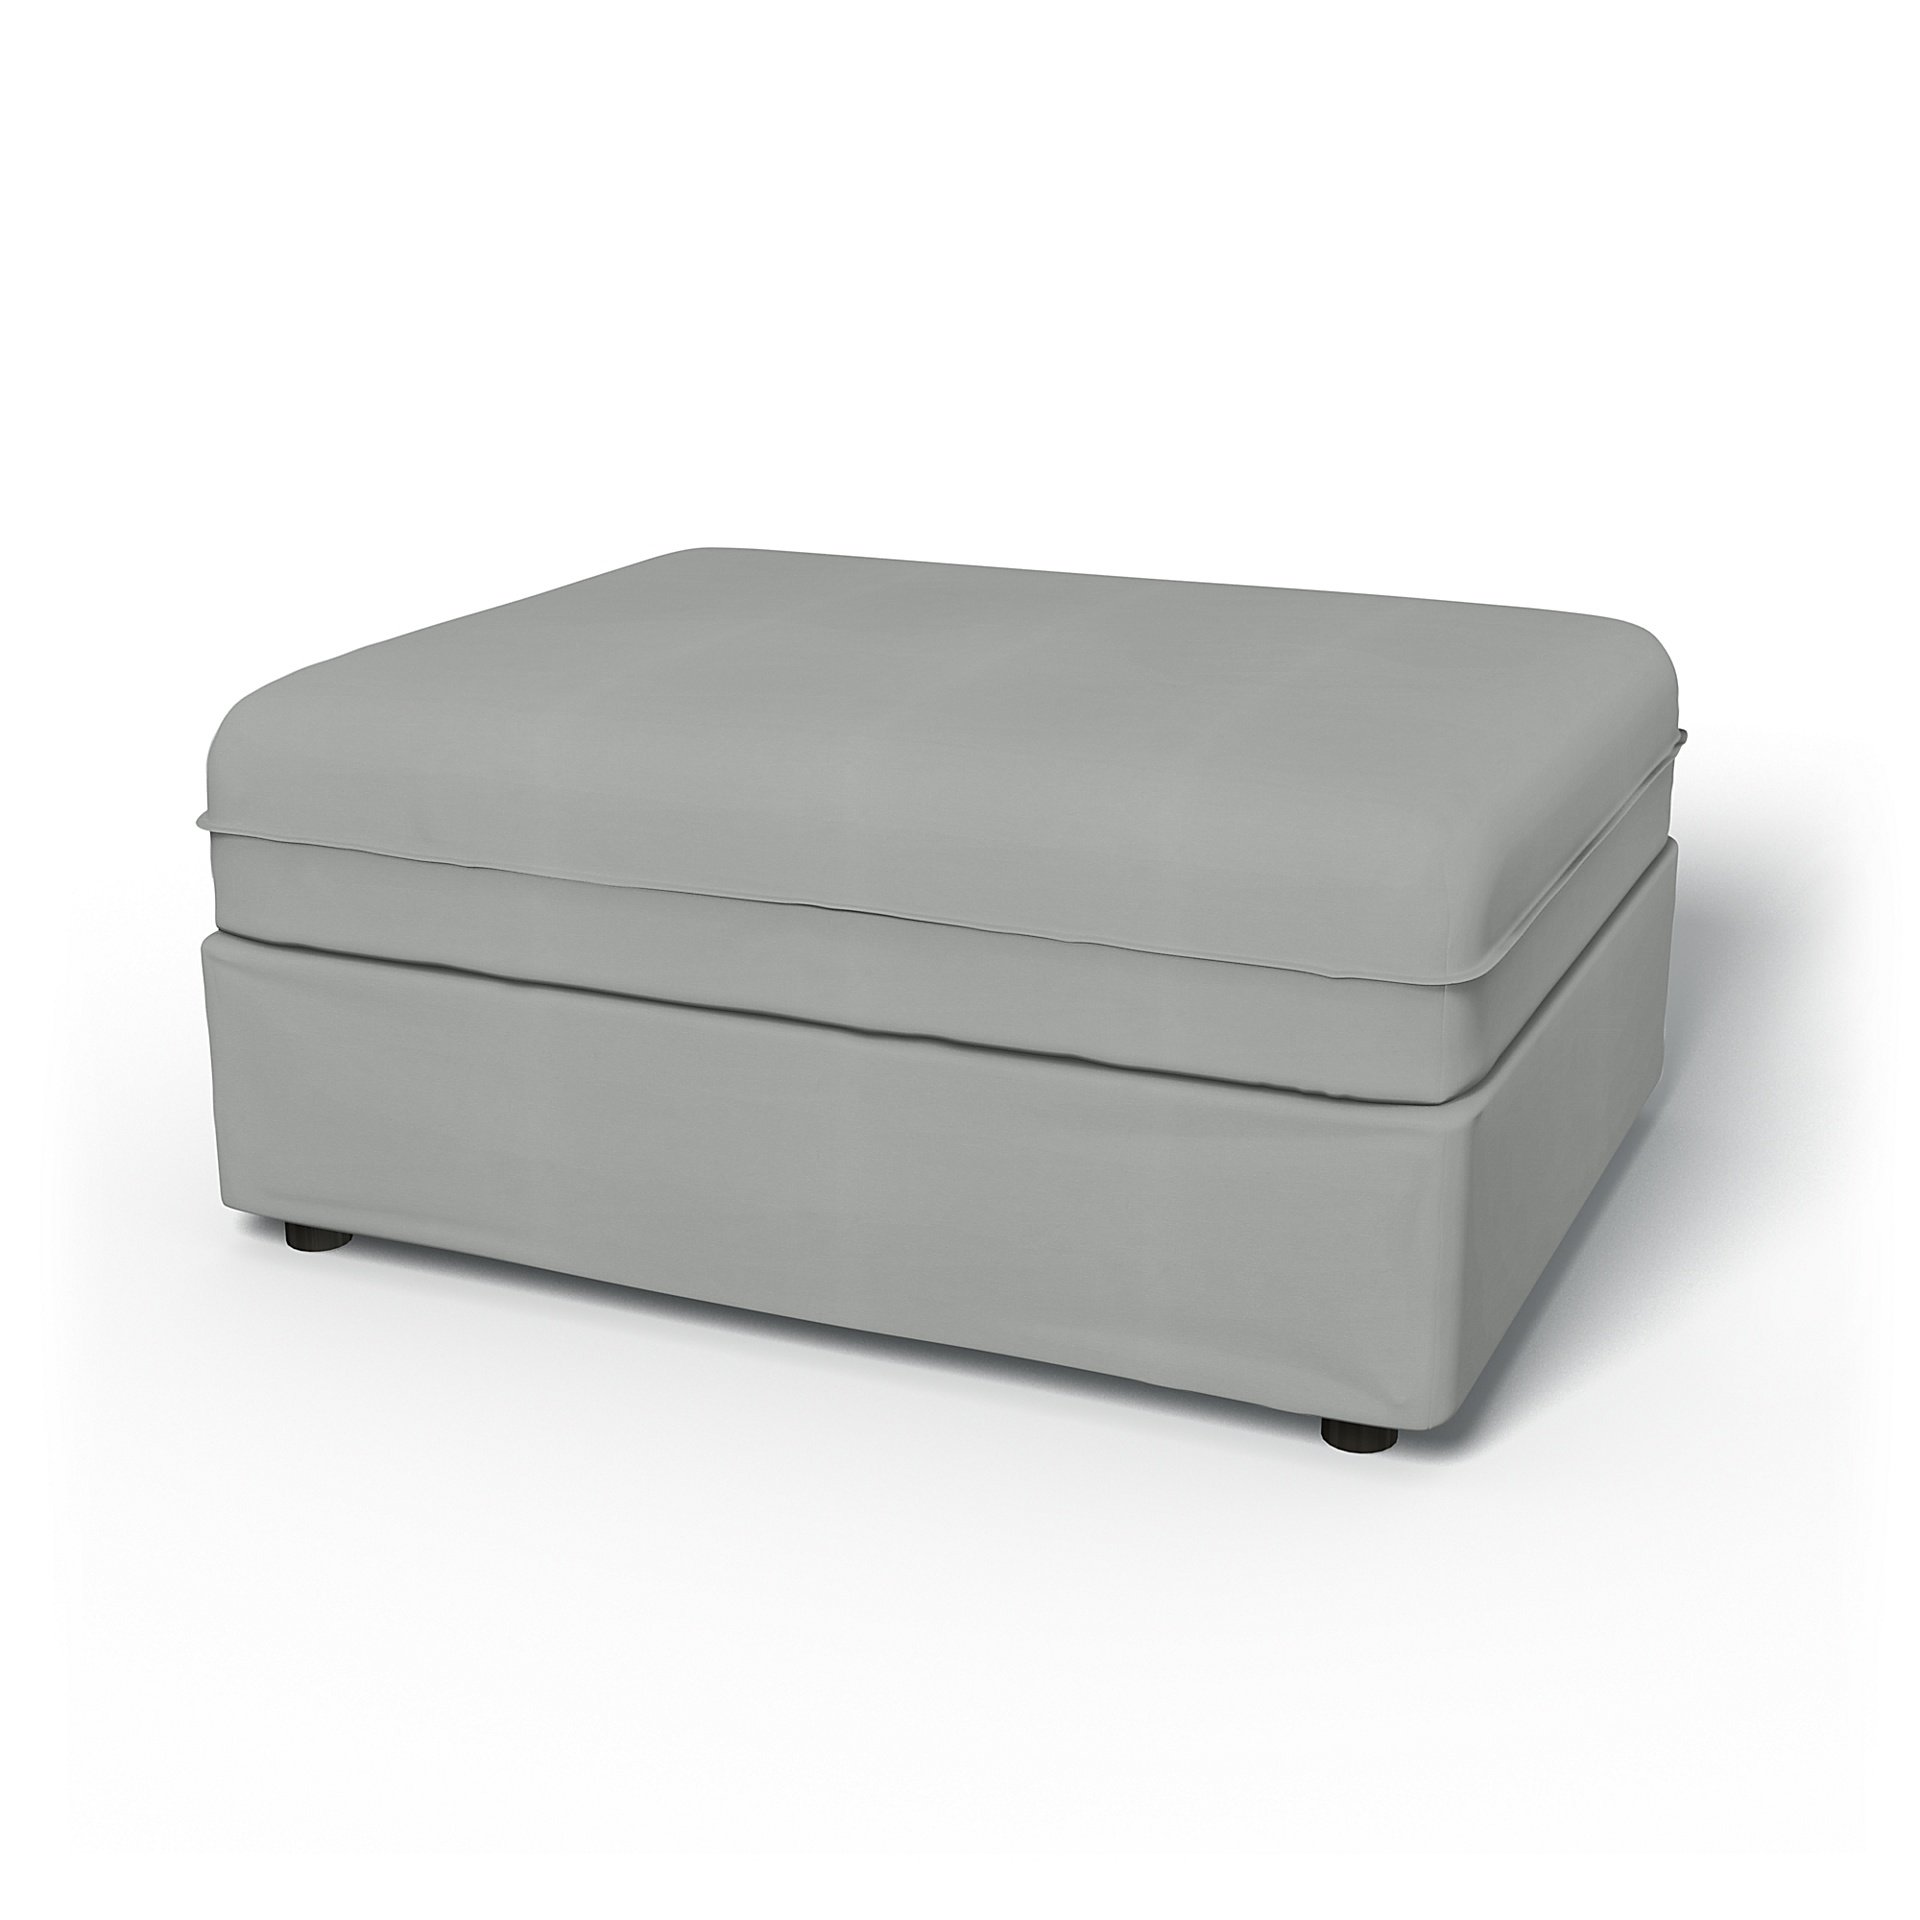 IKEA - Vallentuna Seat Module Cover 100x80cm 39x32in, Silver Grey, Cotton - Bemz